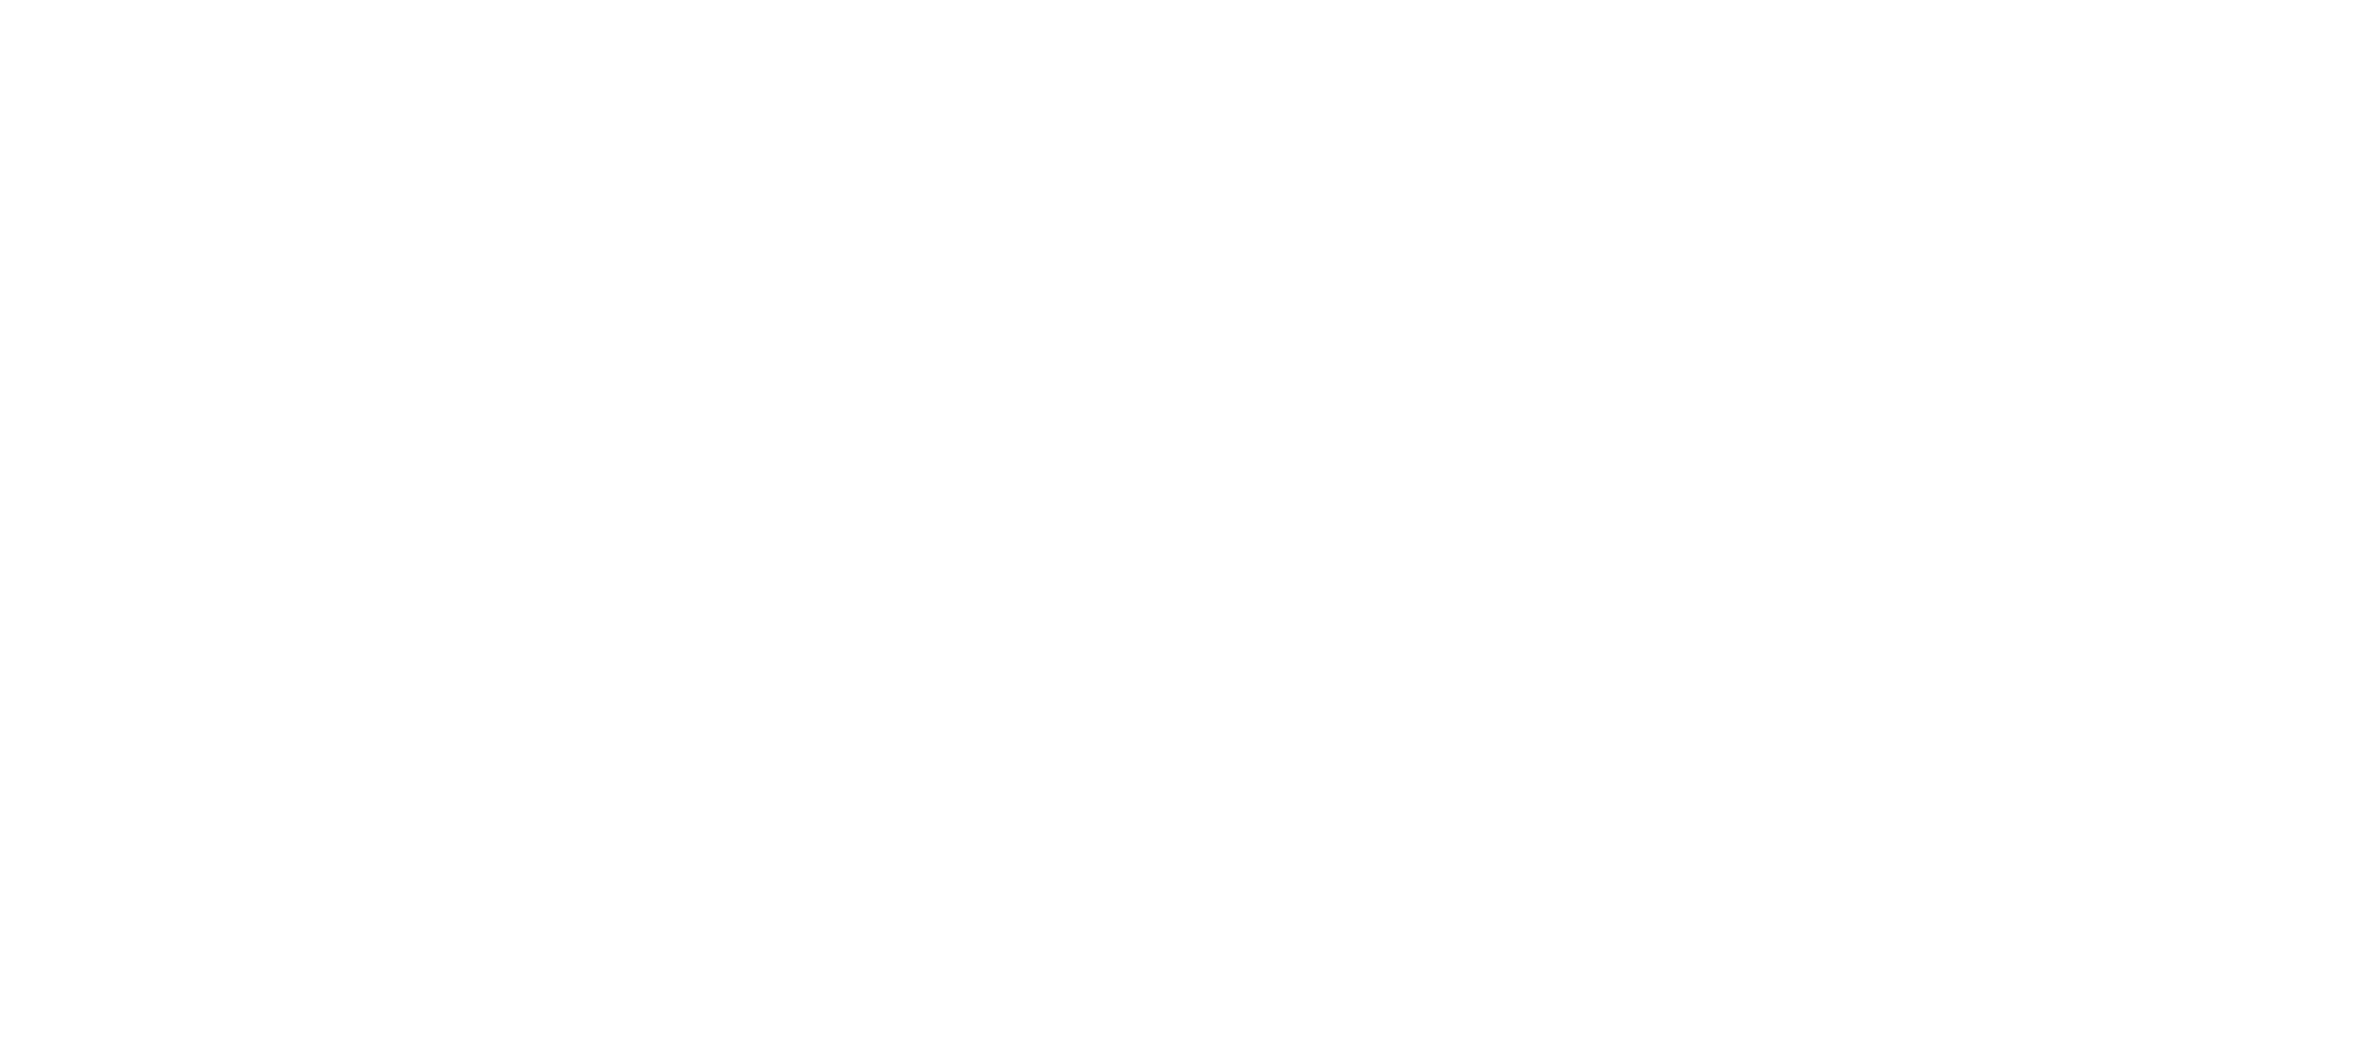 SaltPay logo